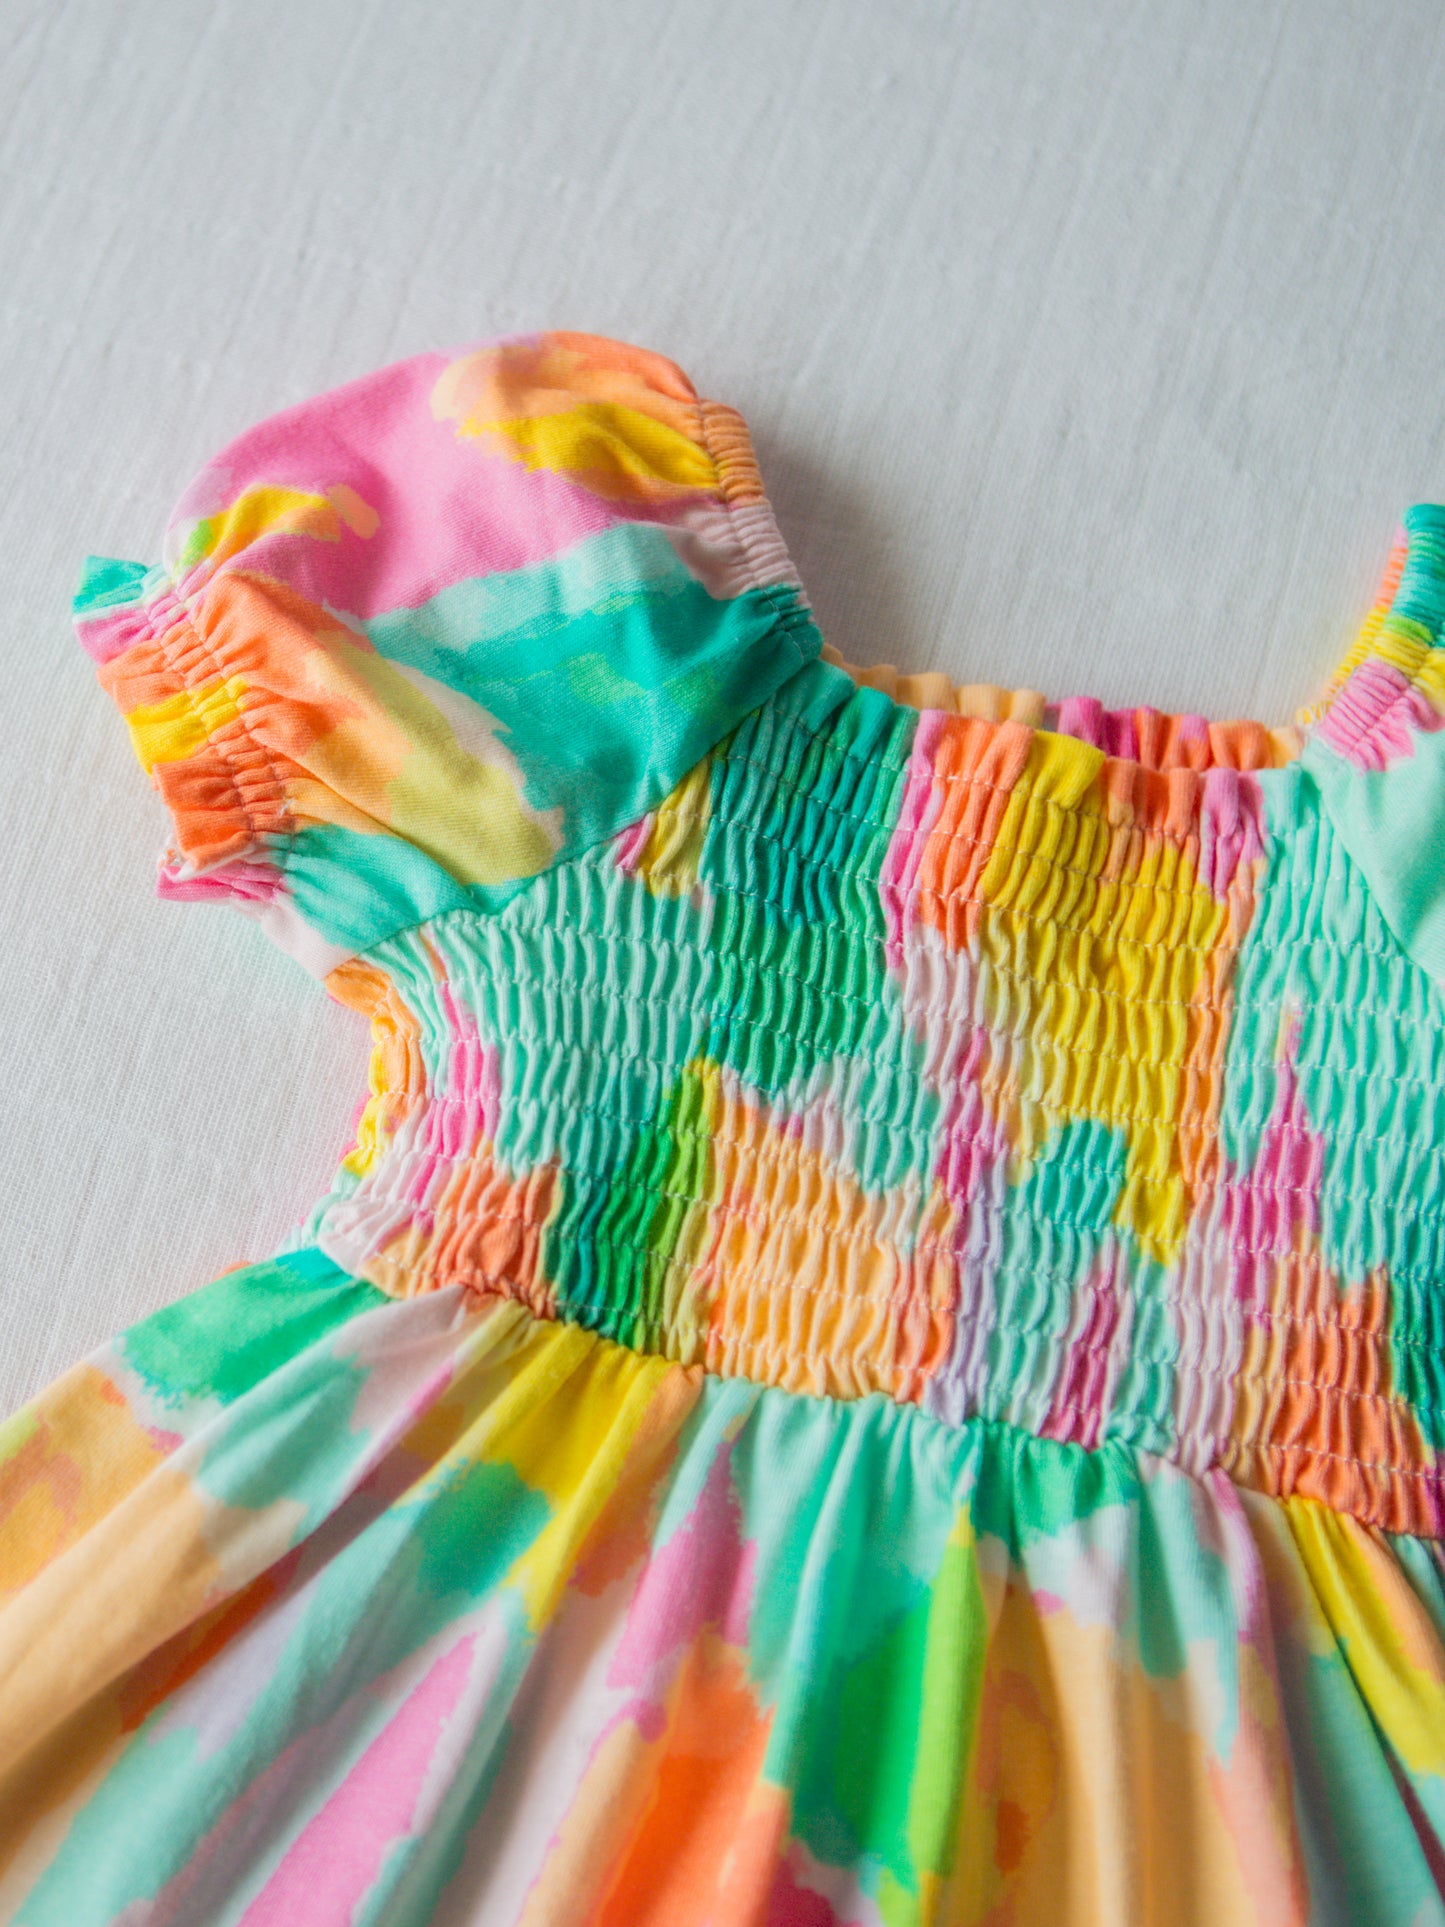 Puff Sleeve Dress - Popsicle Splash